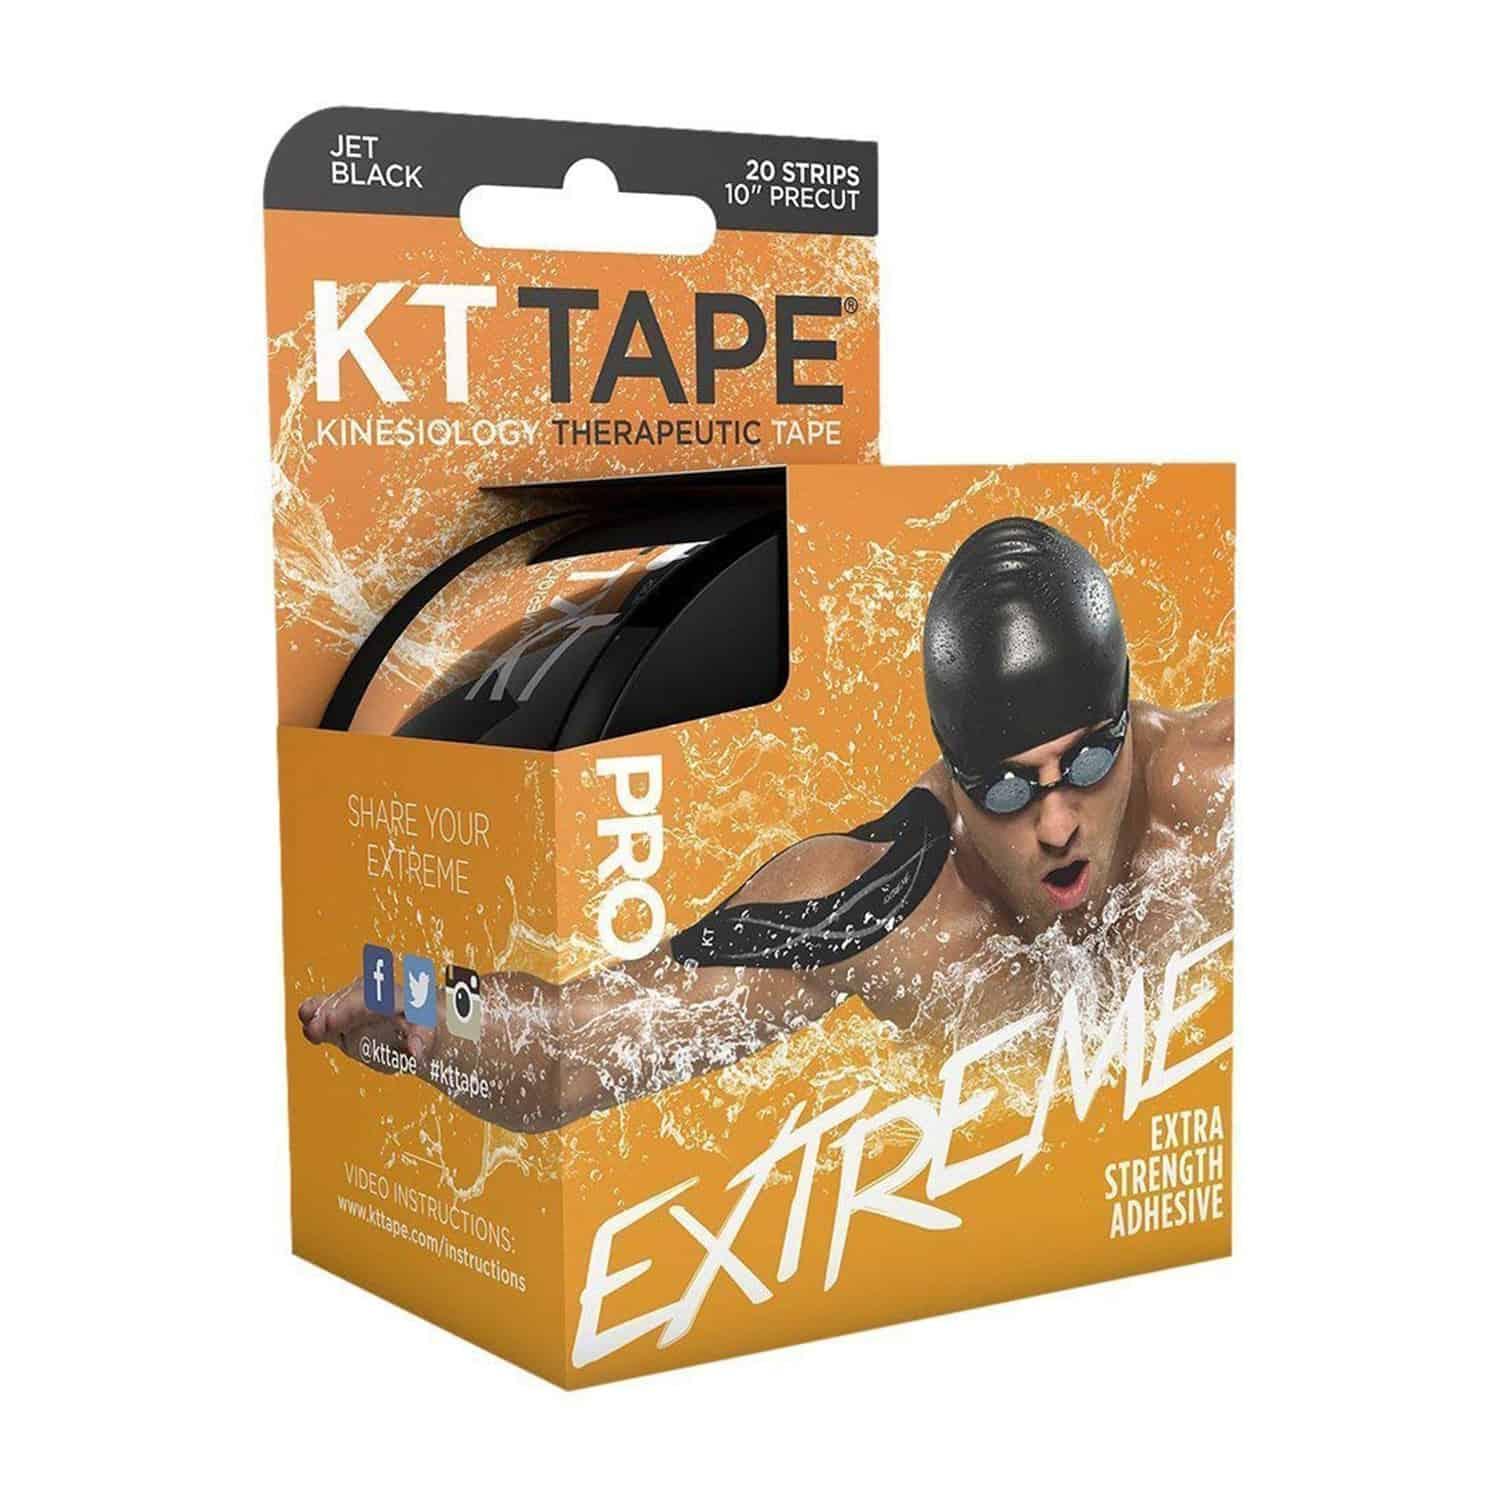 KT Tape Pro 20 Jet Black KTTP-002332 Precut Strips